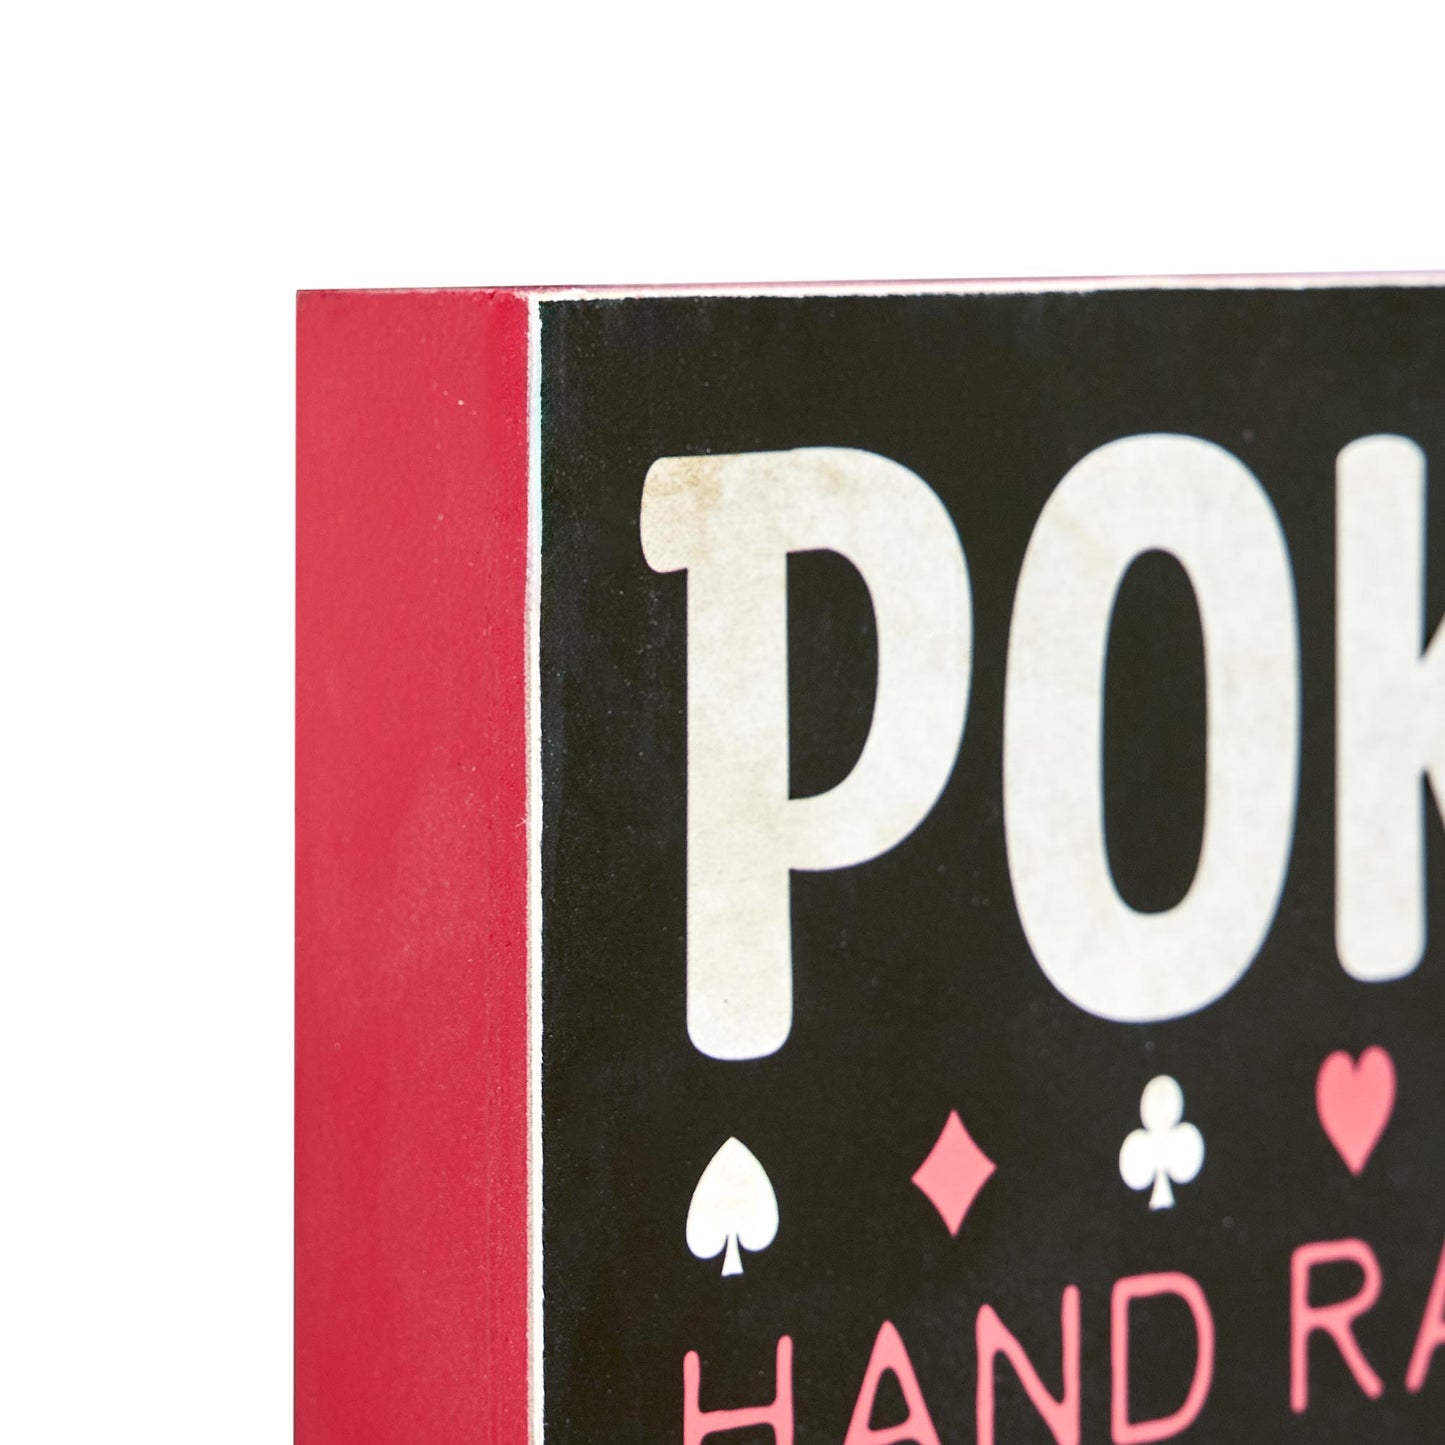 Poker Rules Wall Decor 7.87" x 31.89"